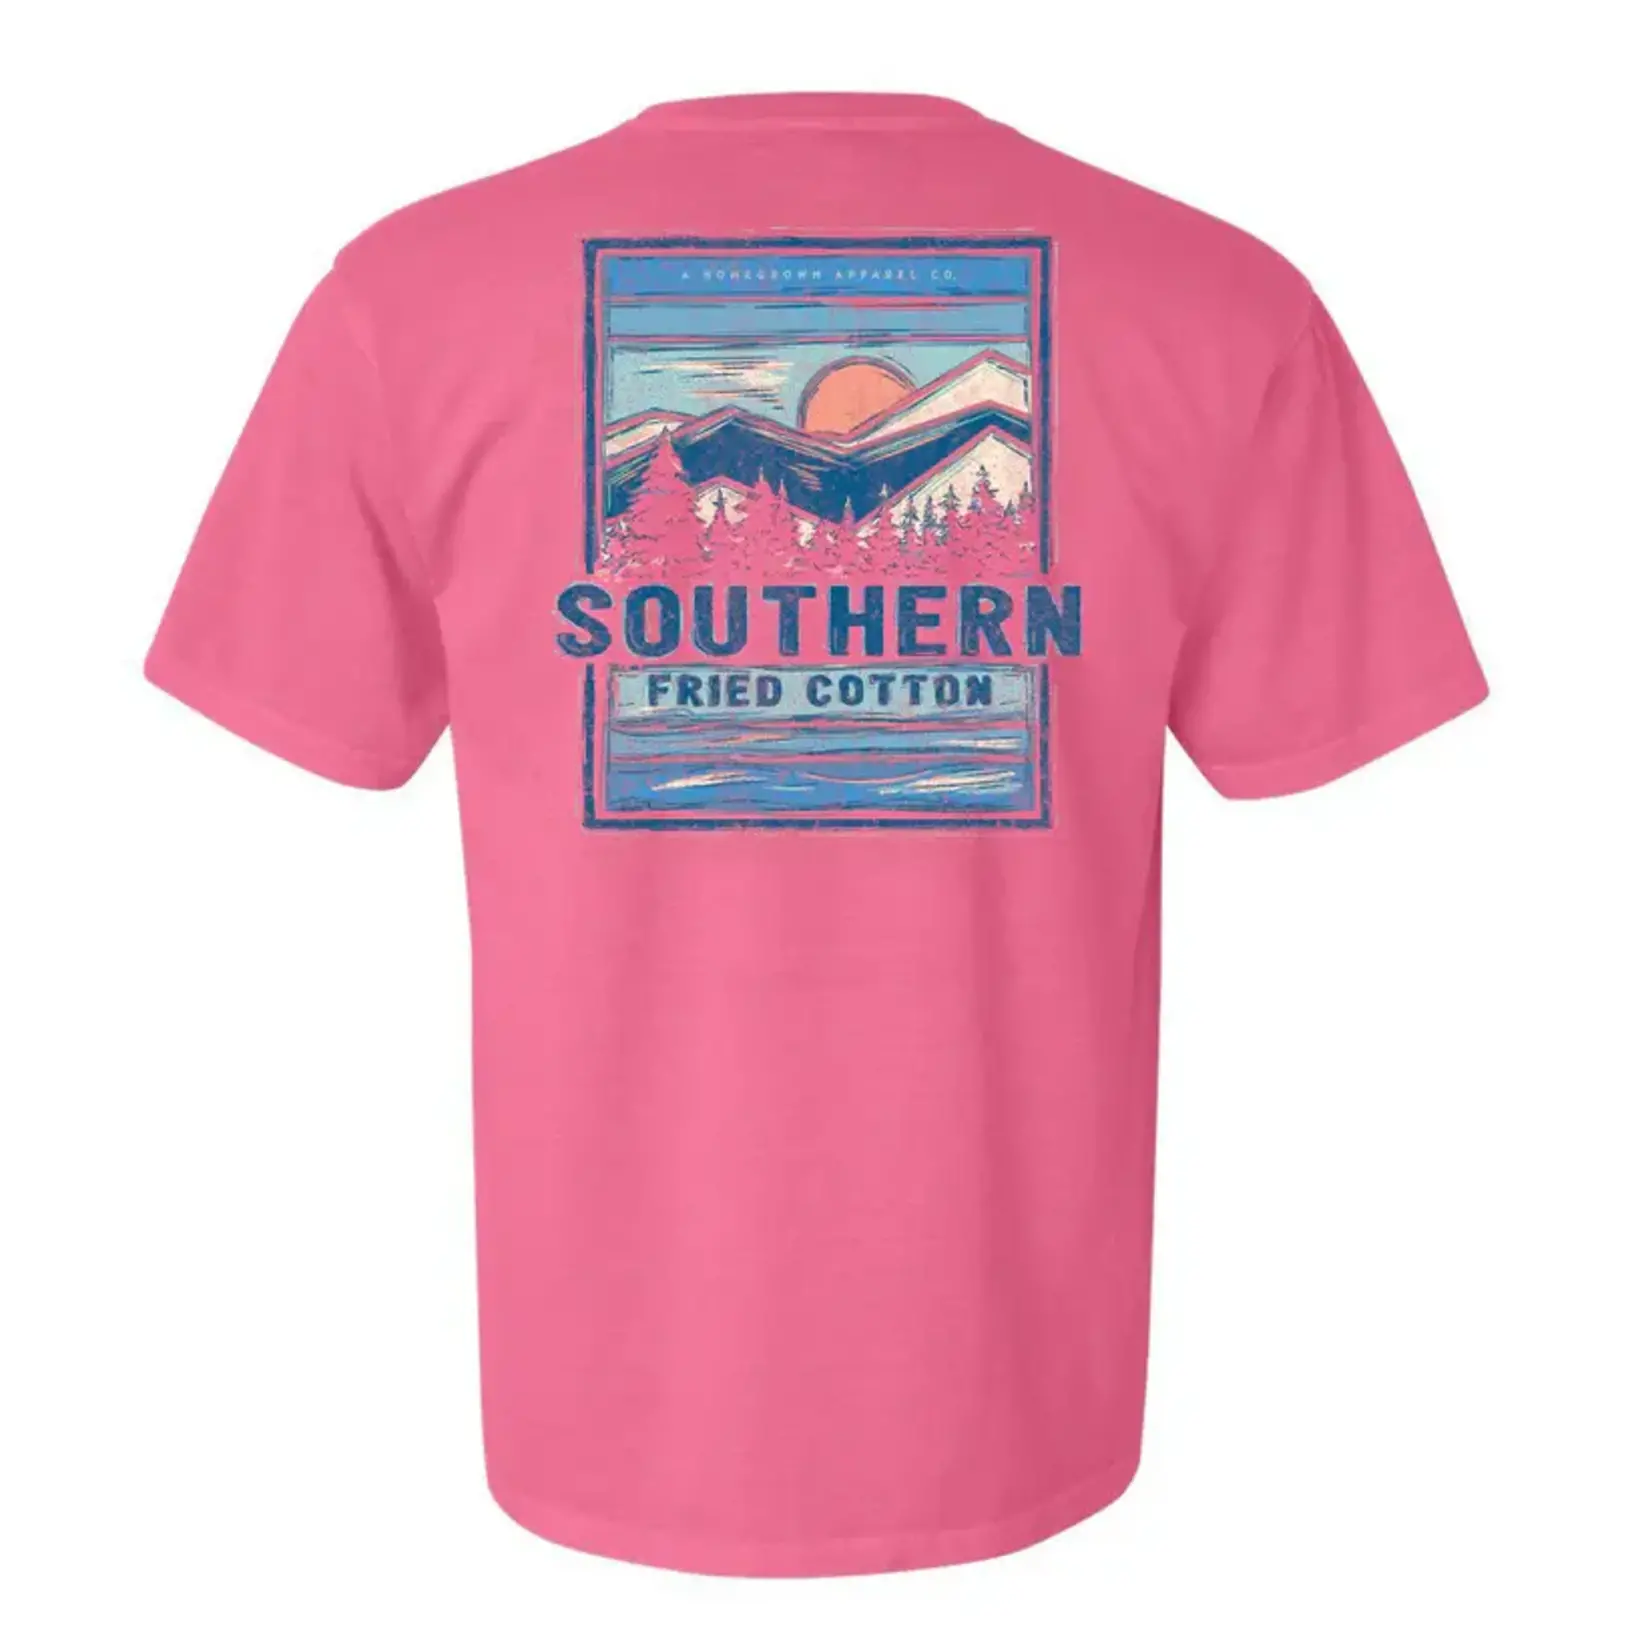 Southern Fried Cotton Southern Fried Cotton Women's Climb the Mountain S/S TEE Shirt